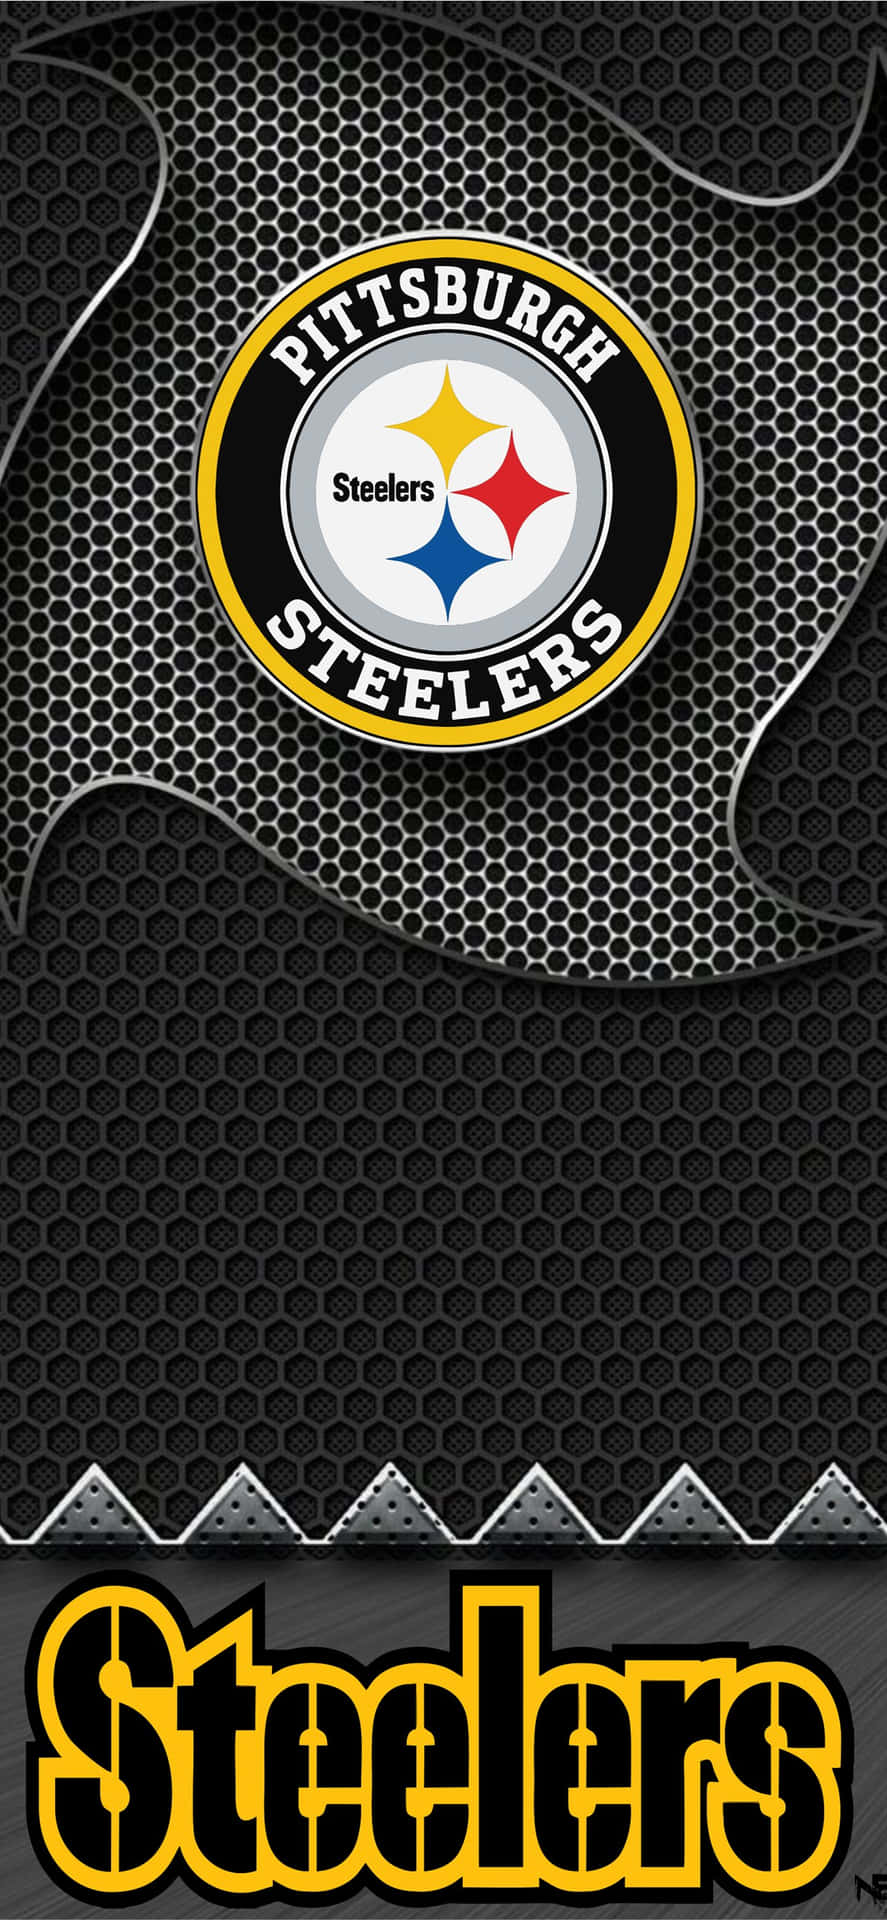 Nflfans Jublar: Visa Din Lags Stolthet Med Steelers Iphone-bakgrundsbild. Wallpaper